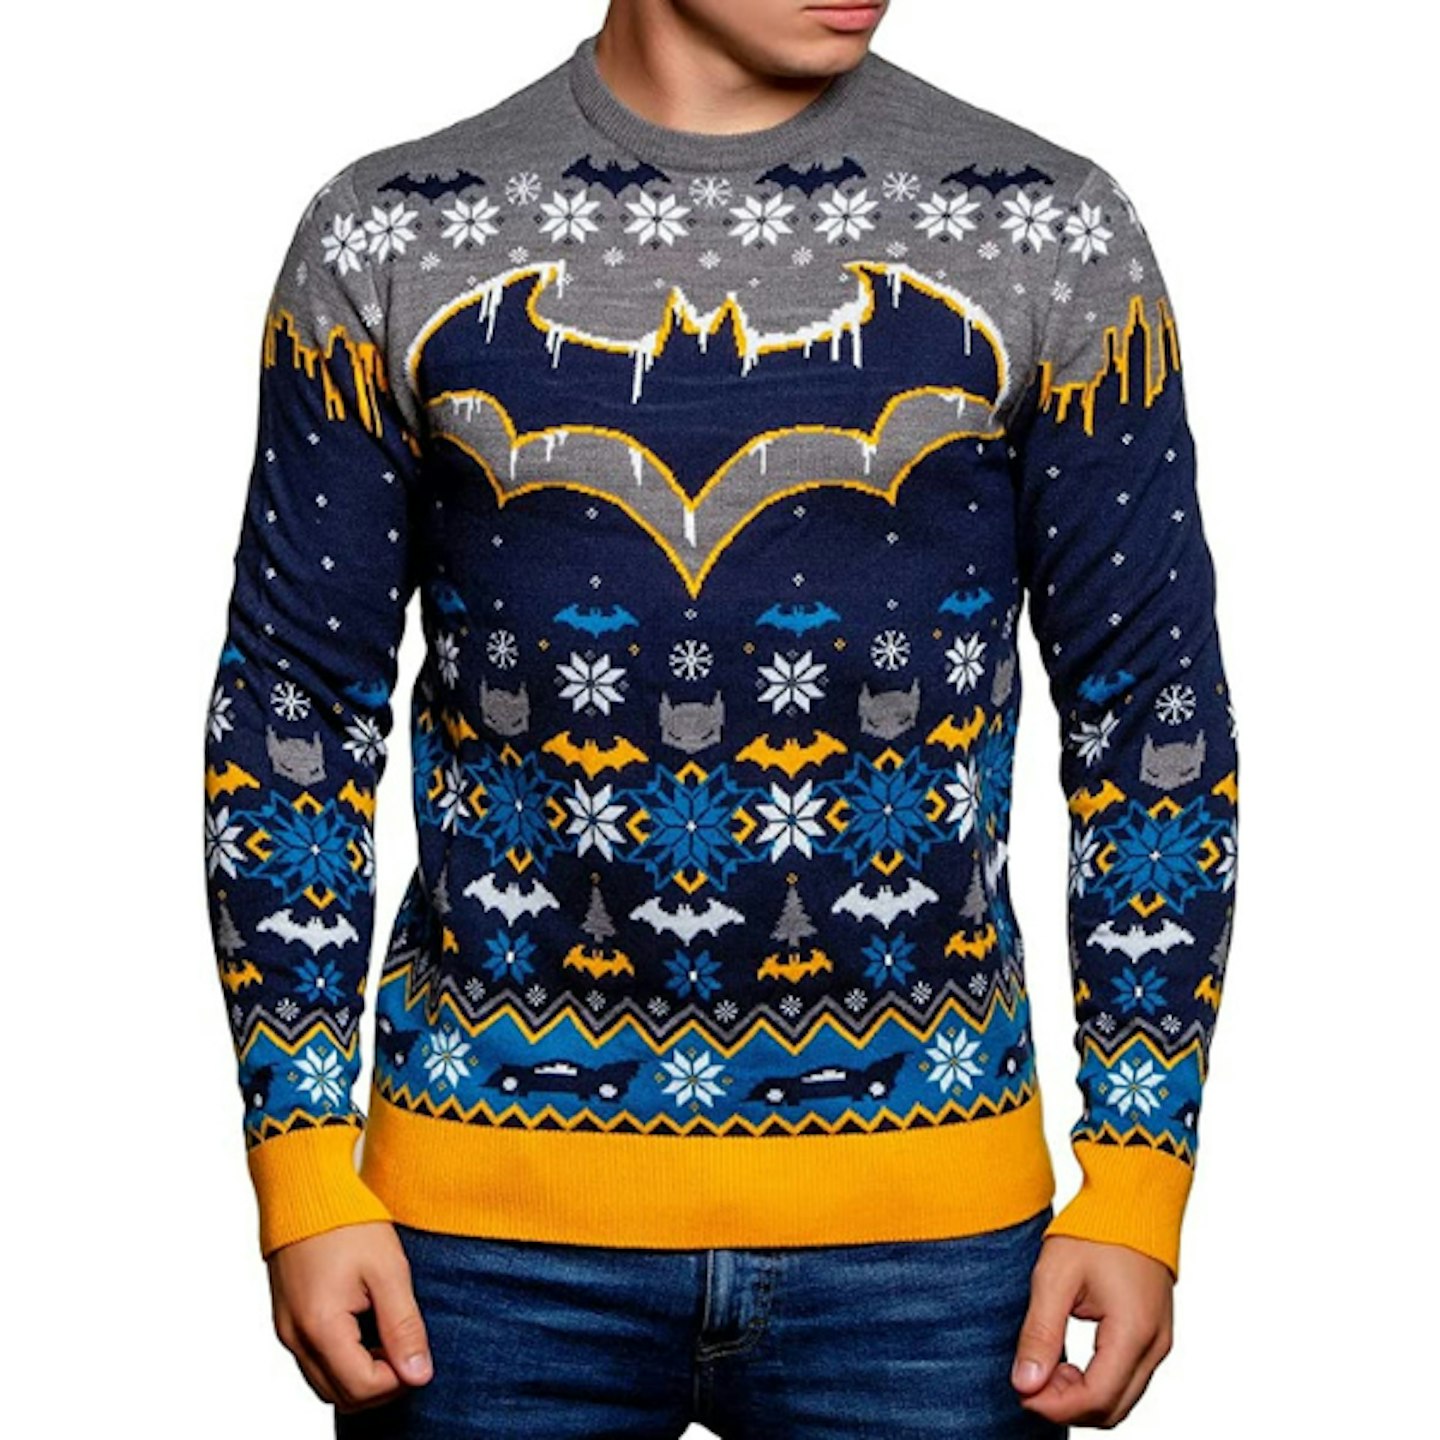 Batman Christmas Jumper for Men or Women - Ugly Sweater Gift